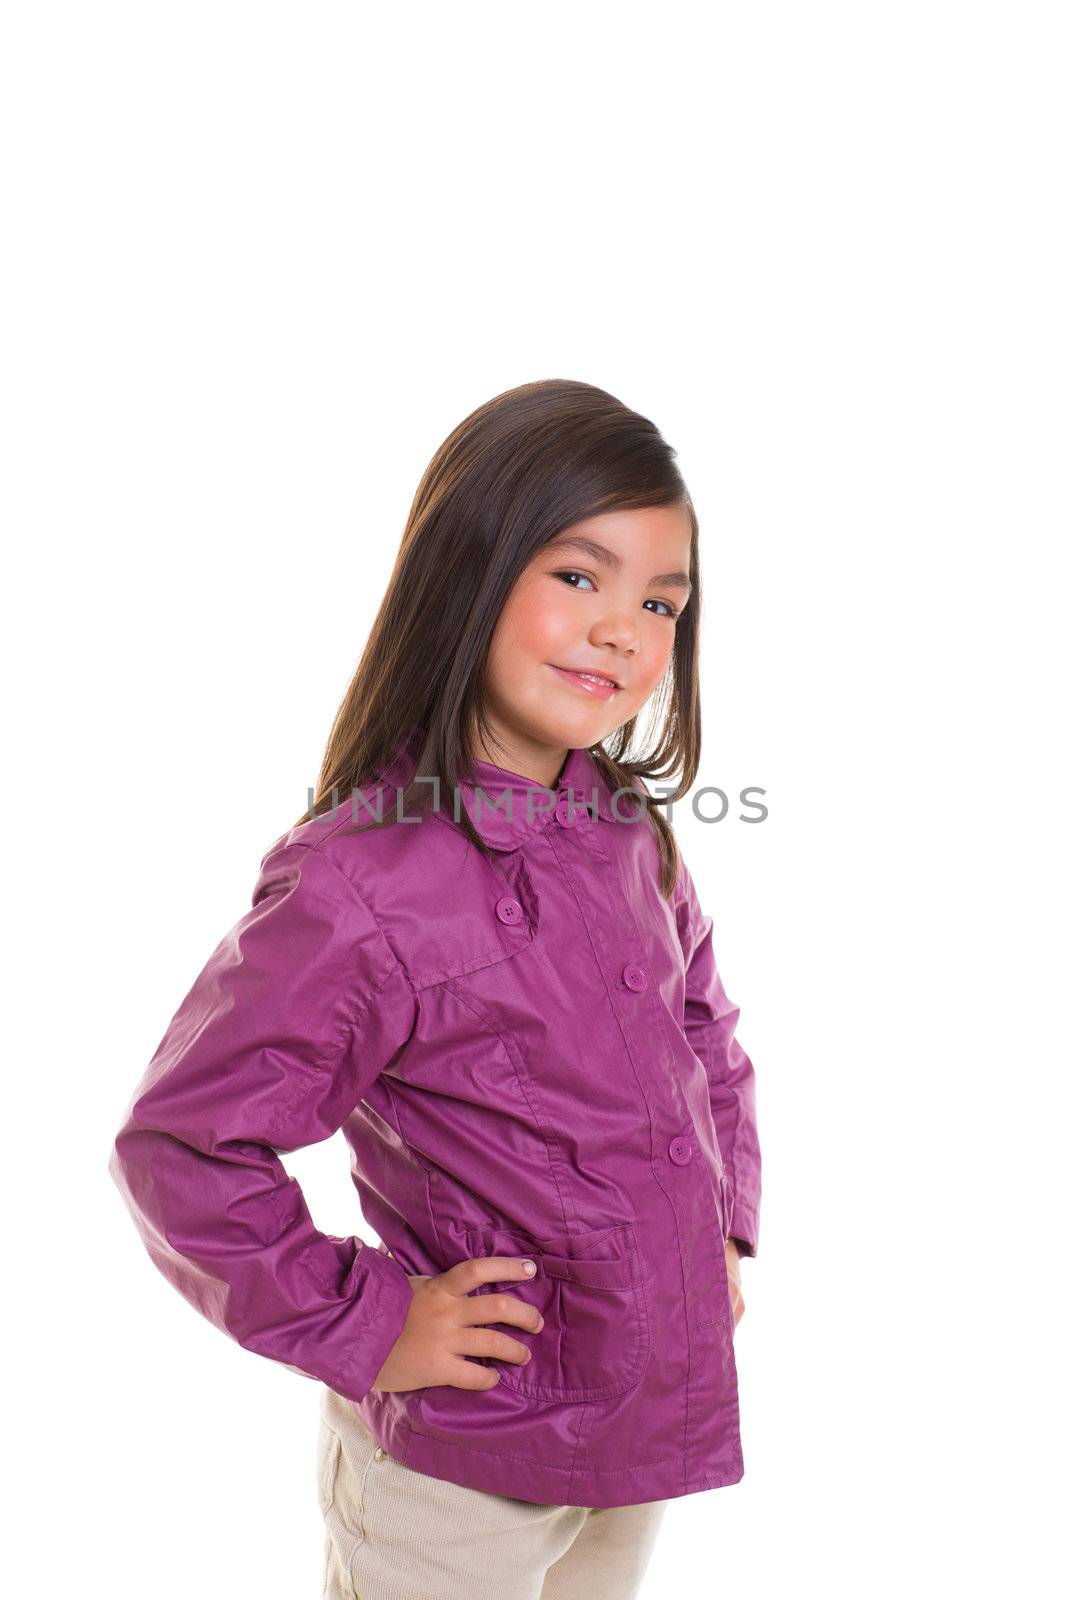 Asian child girl smiling with winter purple coat by lunamarina